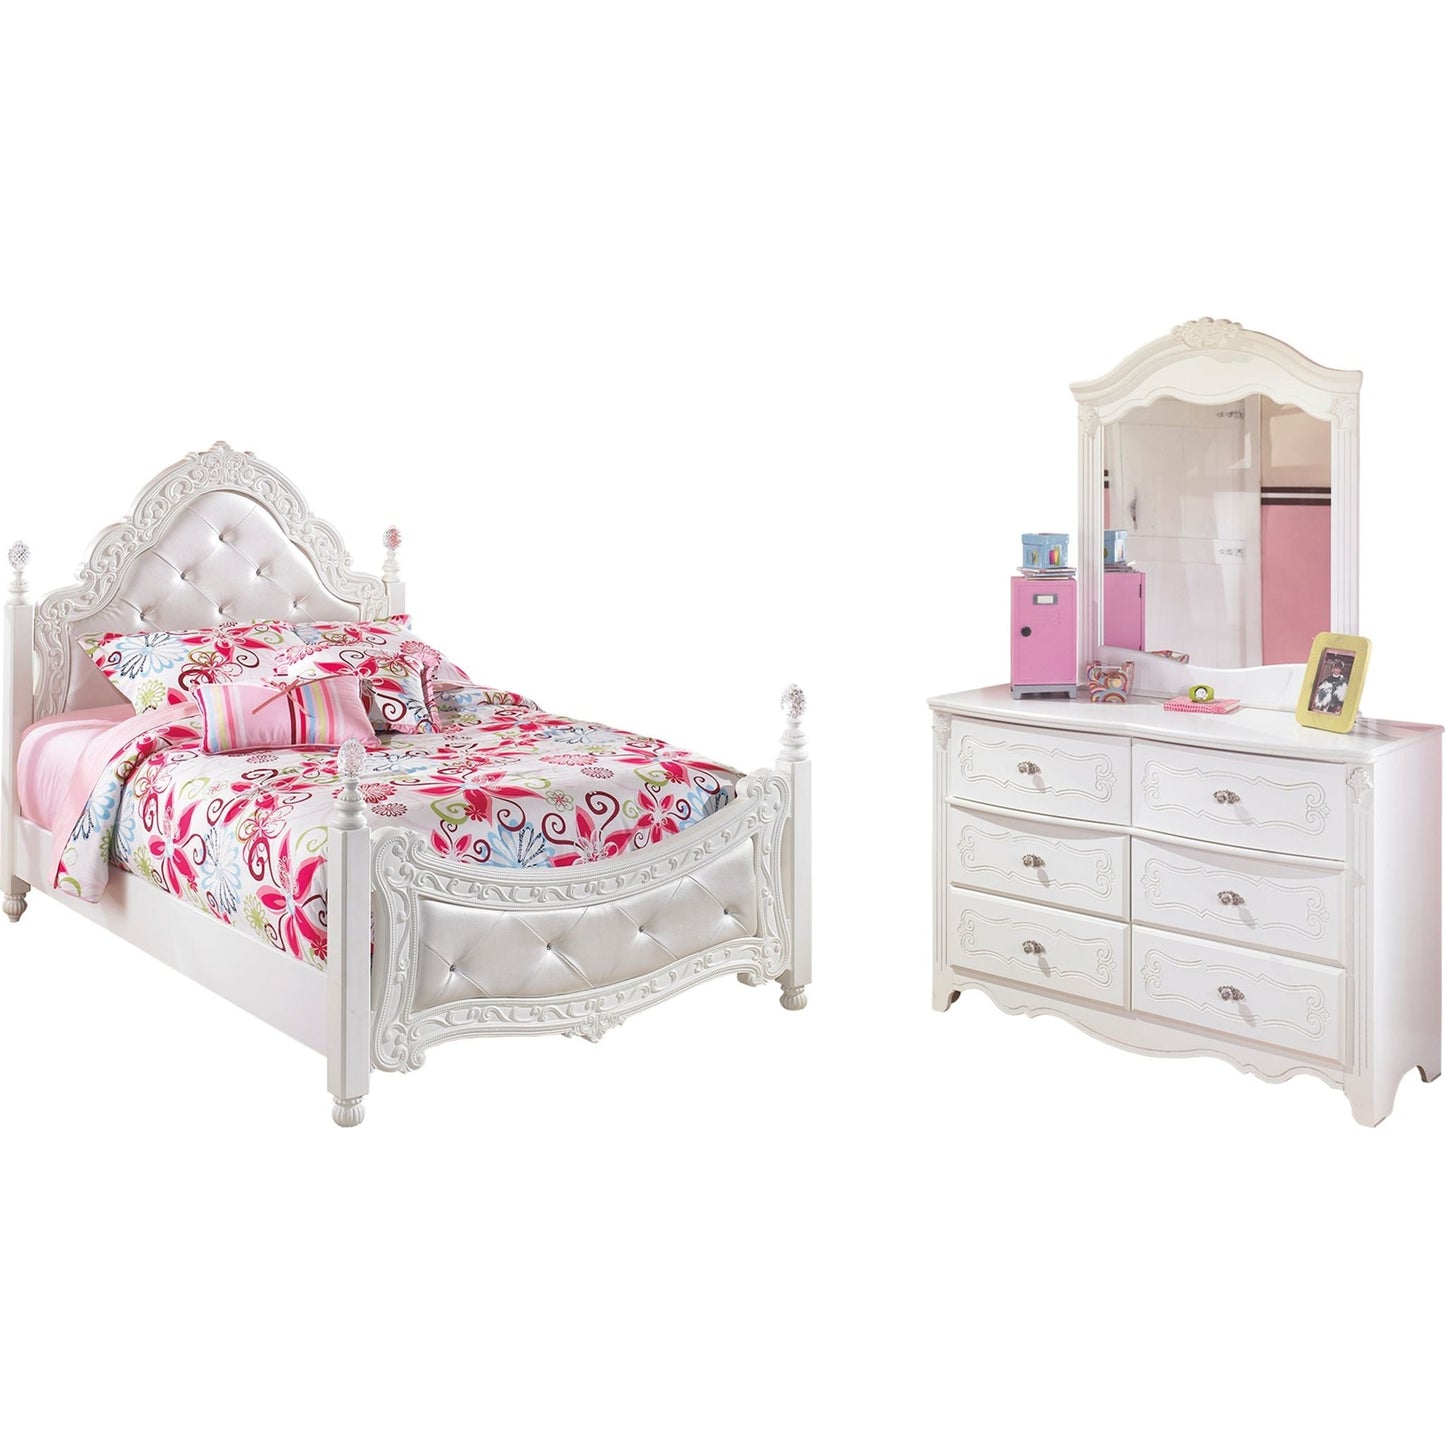 Exquisite 5 Piece Twin Bedroom - White